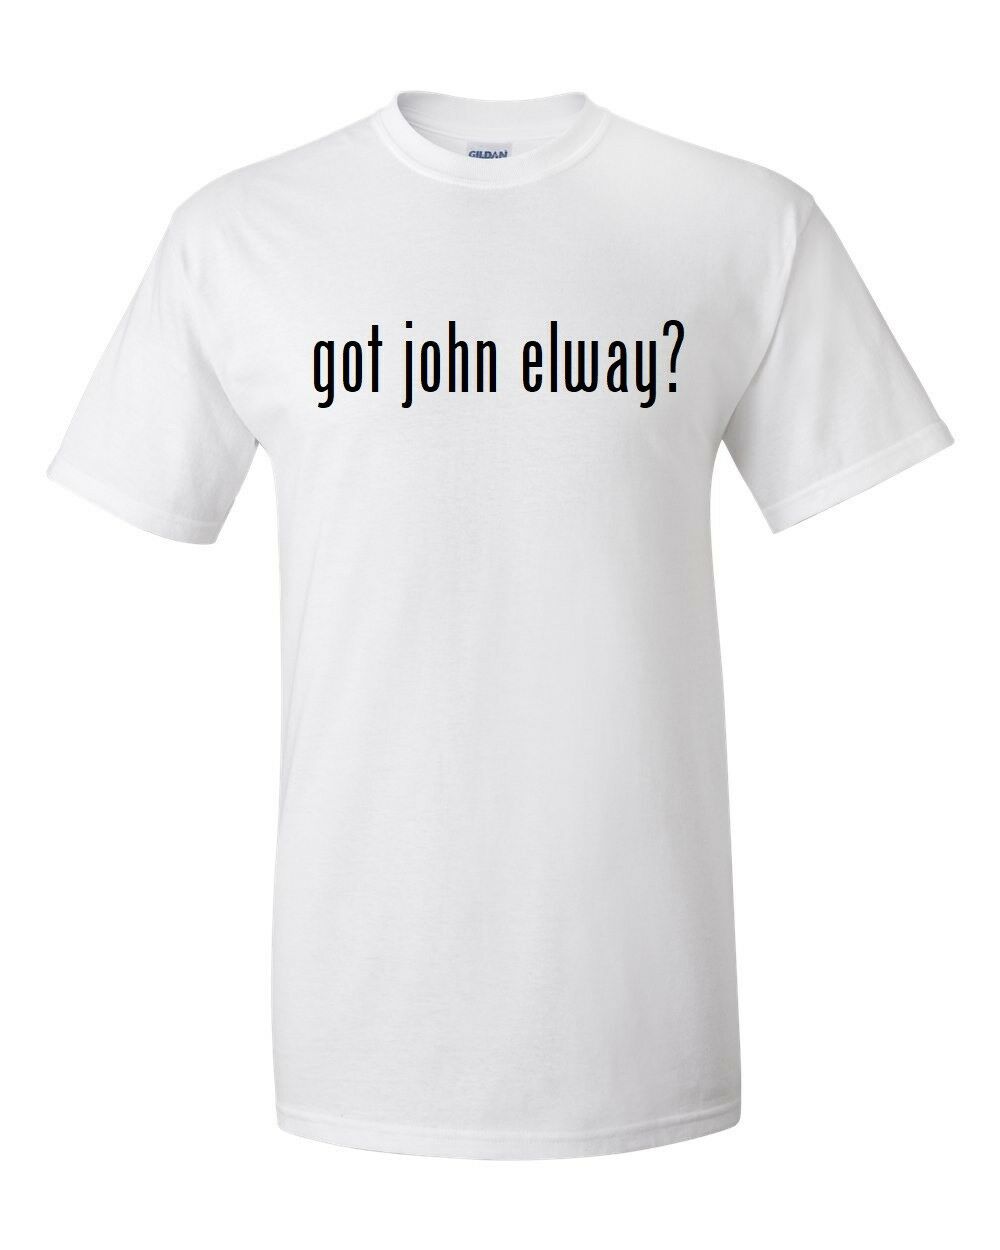 Got John Elway ? Cotton T-Shirt Shirt Black White Funny Solid  S - 5XL